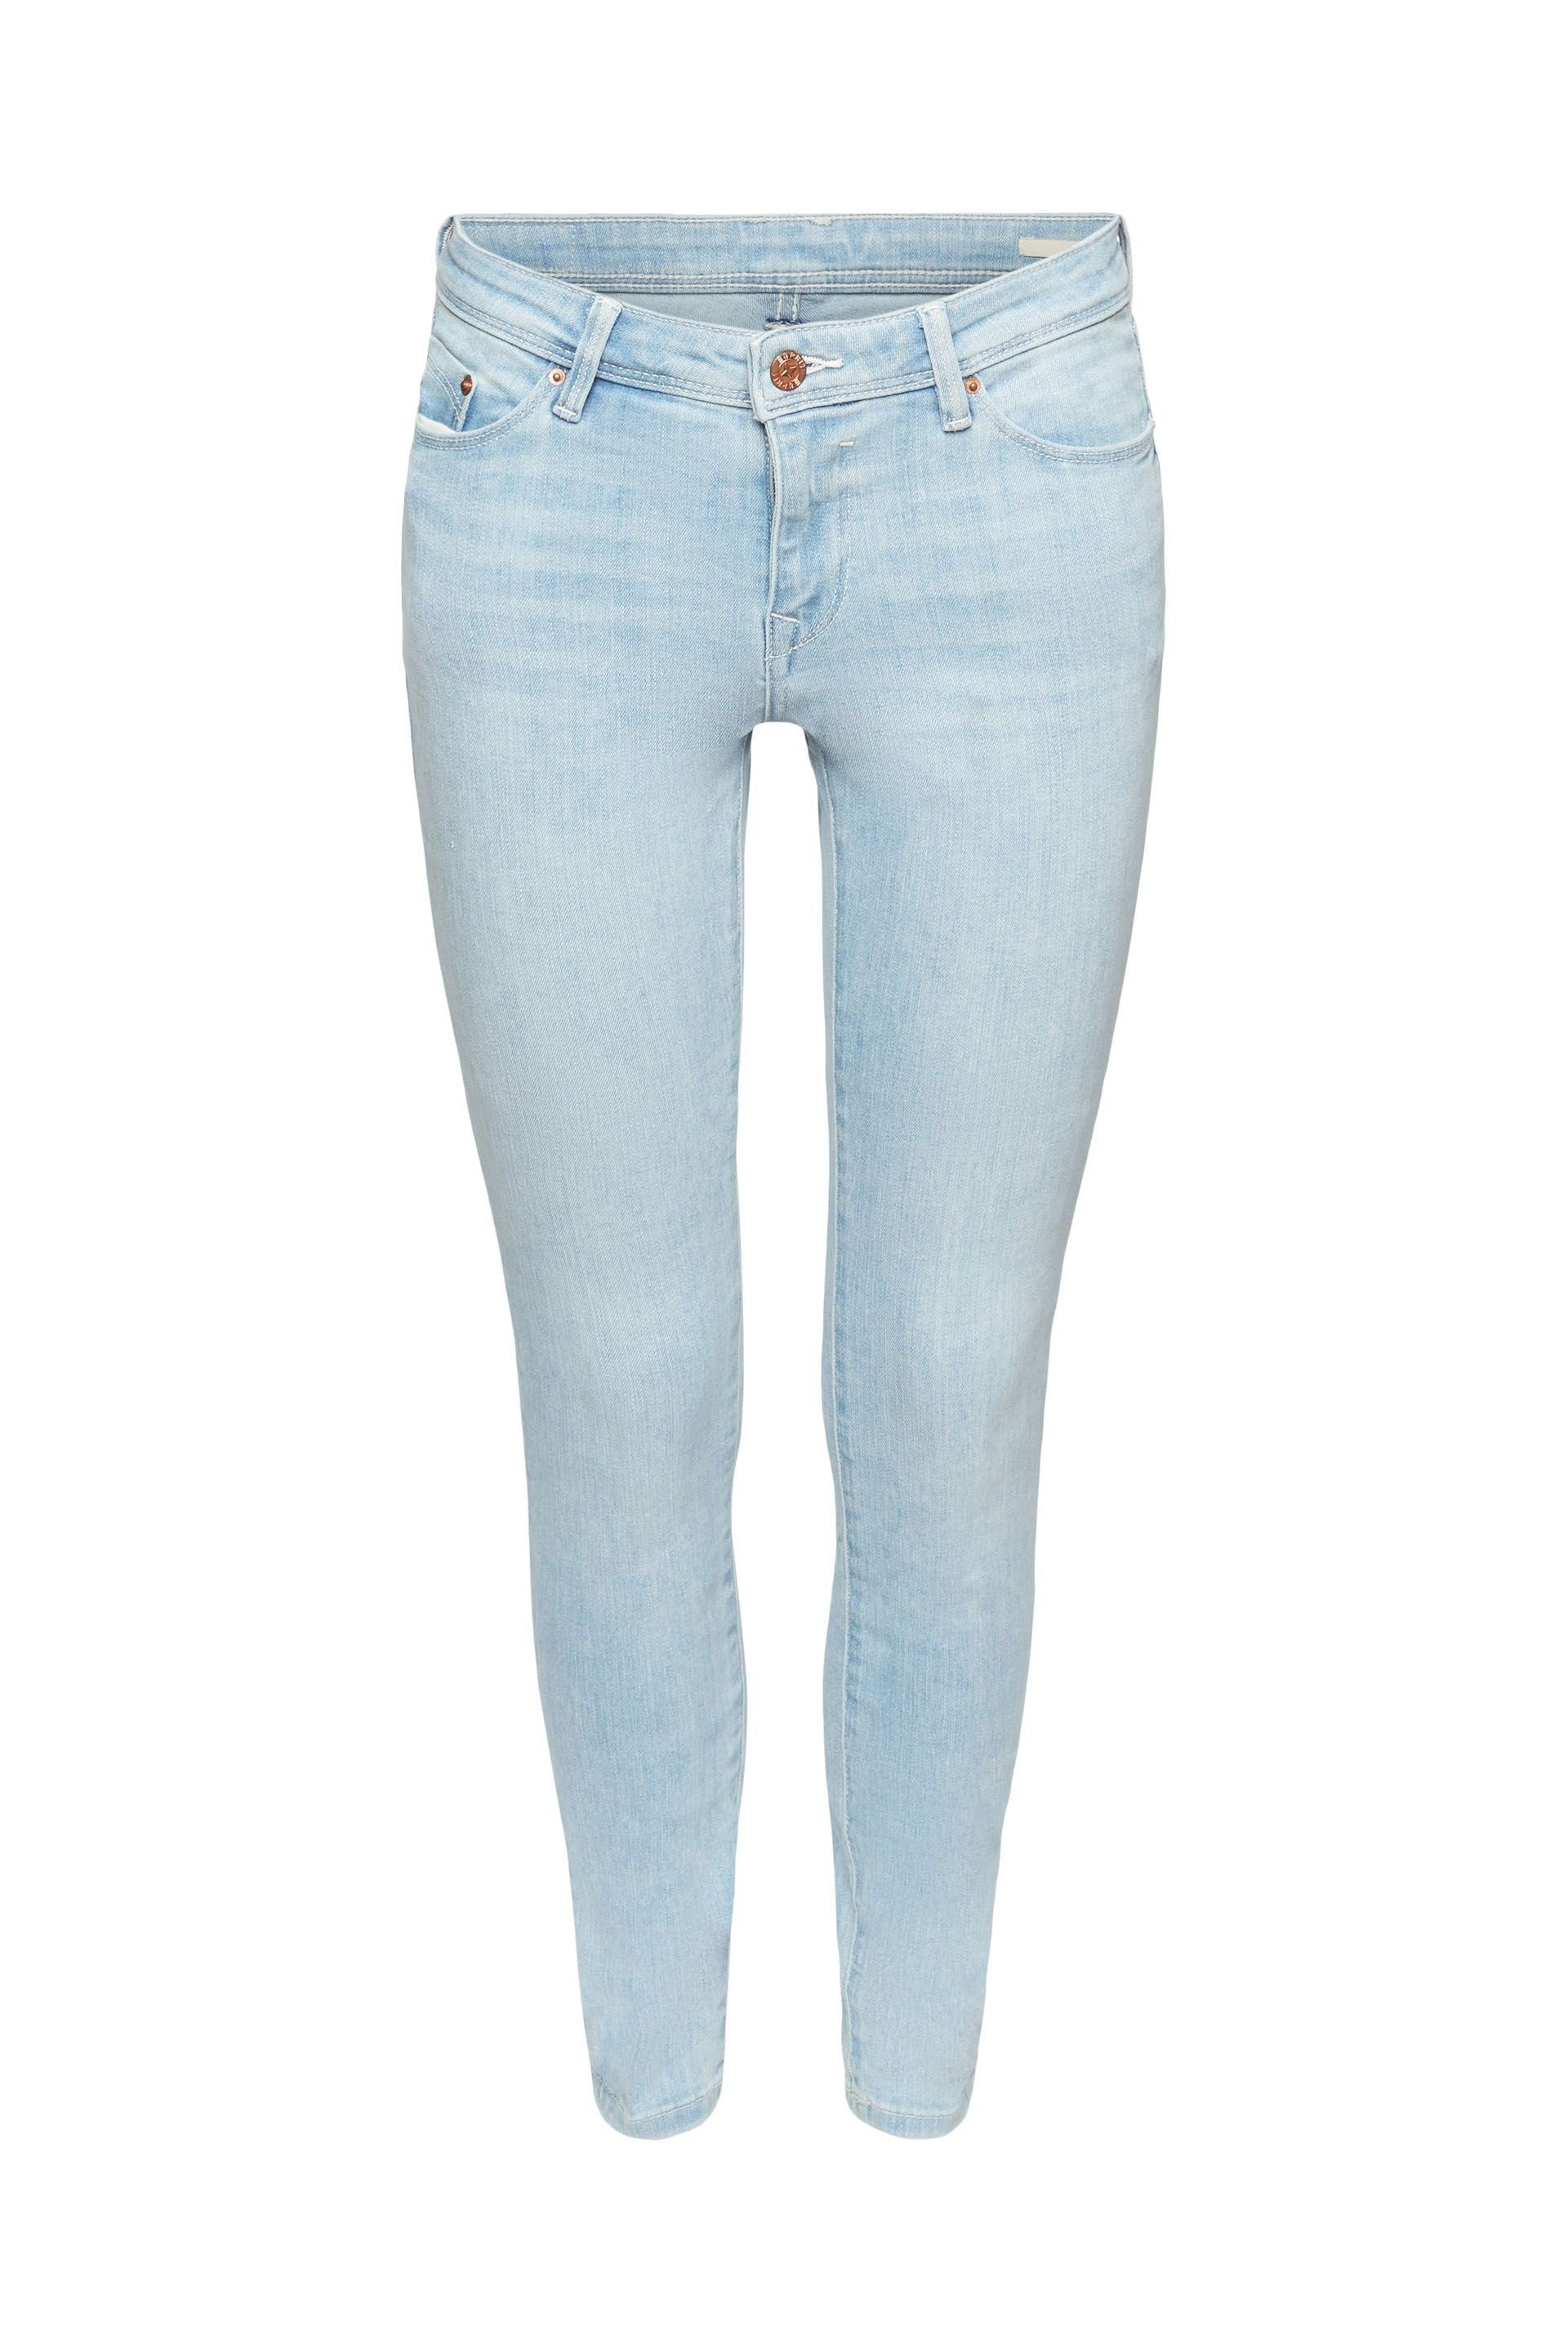 Esprit edc 5-Pocket-Jeans by